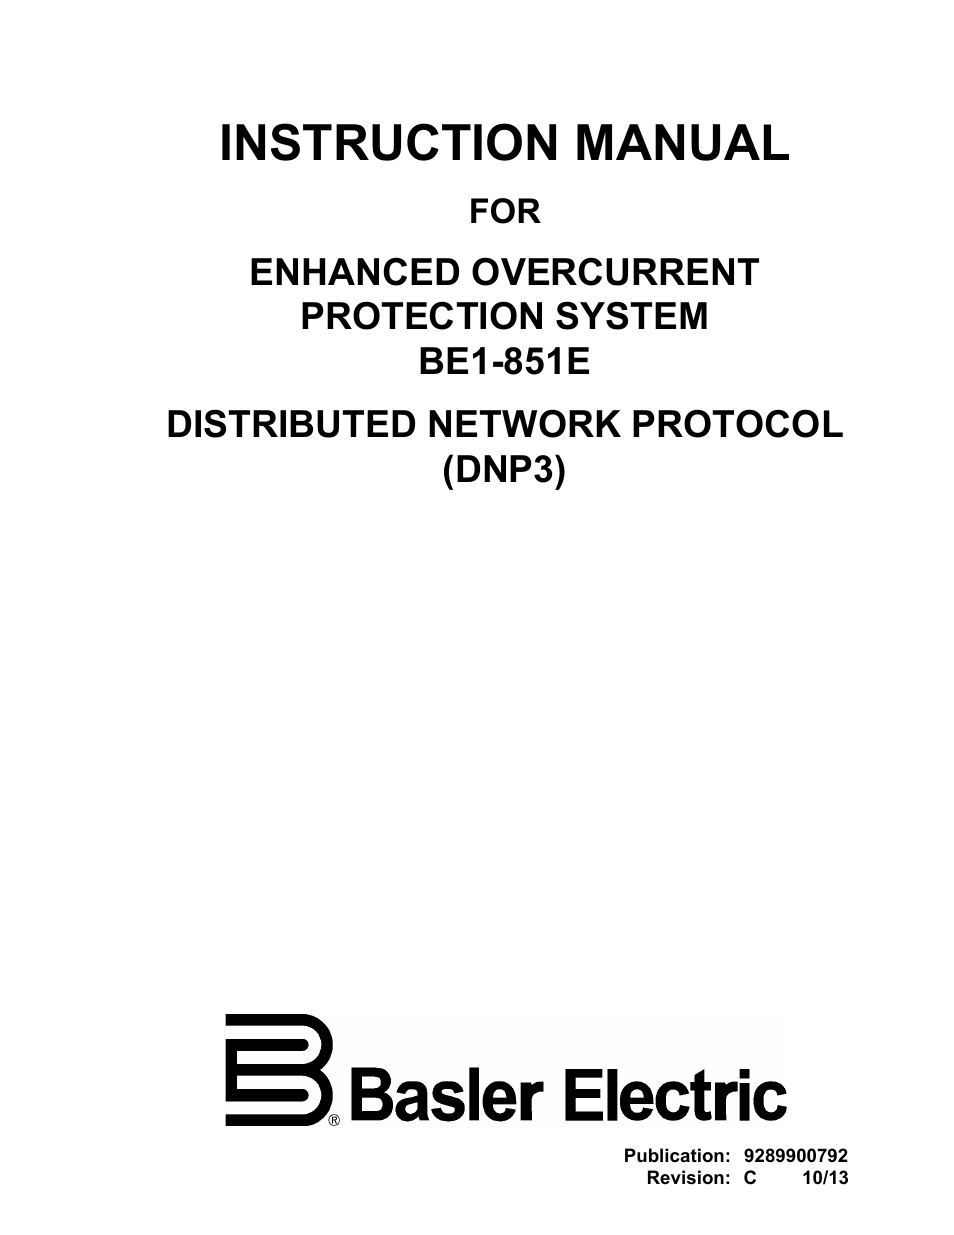 BE1-851 DNP3 Protocol